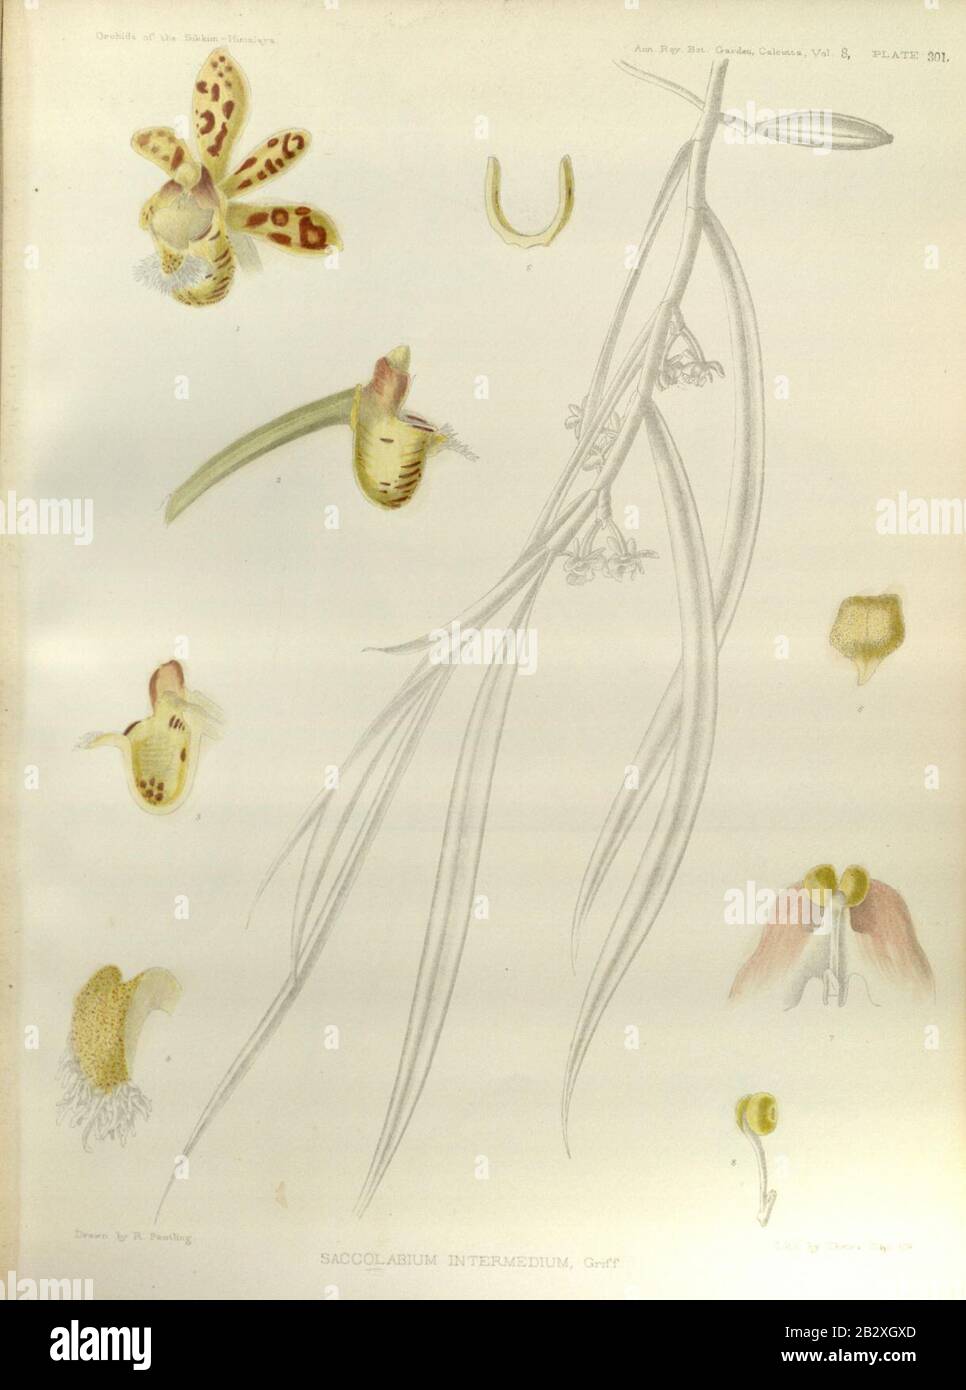 Gastrochilus linearifolius (as Saccolabium intermedium) - The Orchids of the Sikkim-Himalaya pl 301 (1889). Stock Photo